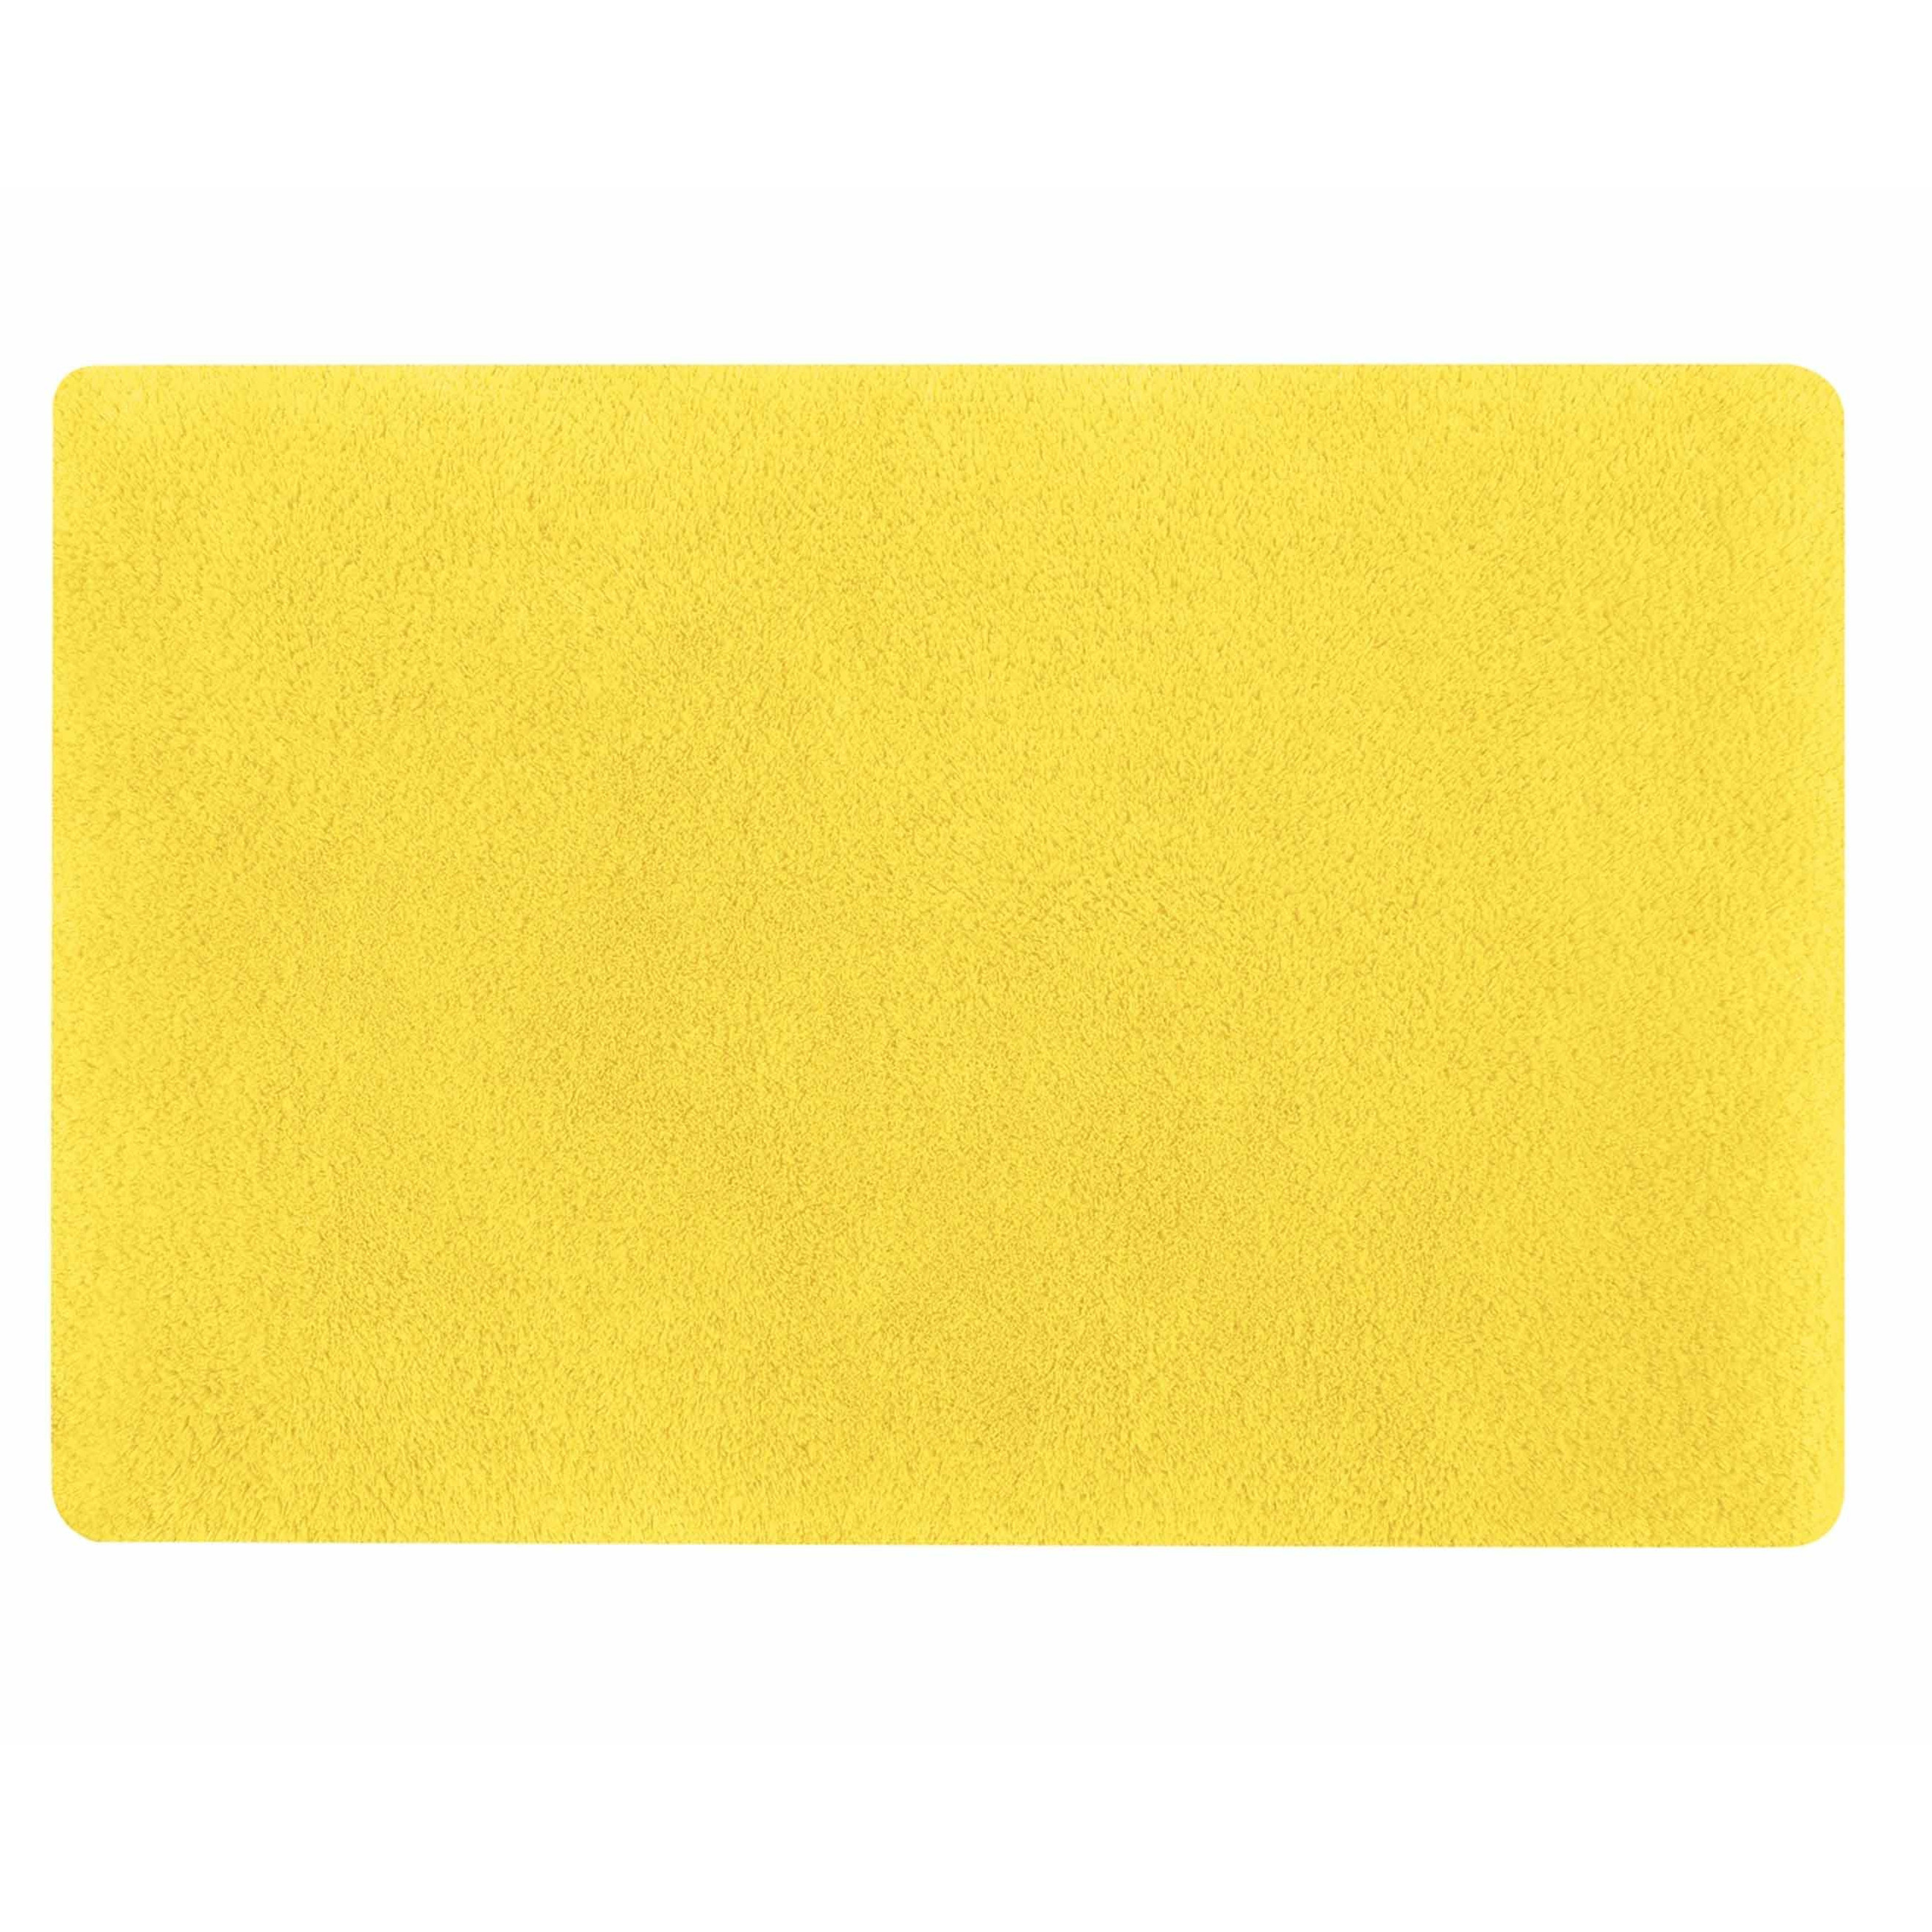 Spirella badkamer vloer kleedje-badmat tapijt hoogpolig en luxe uitvoering geel 50 x 80 cm Microfibe